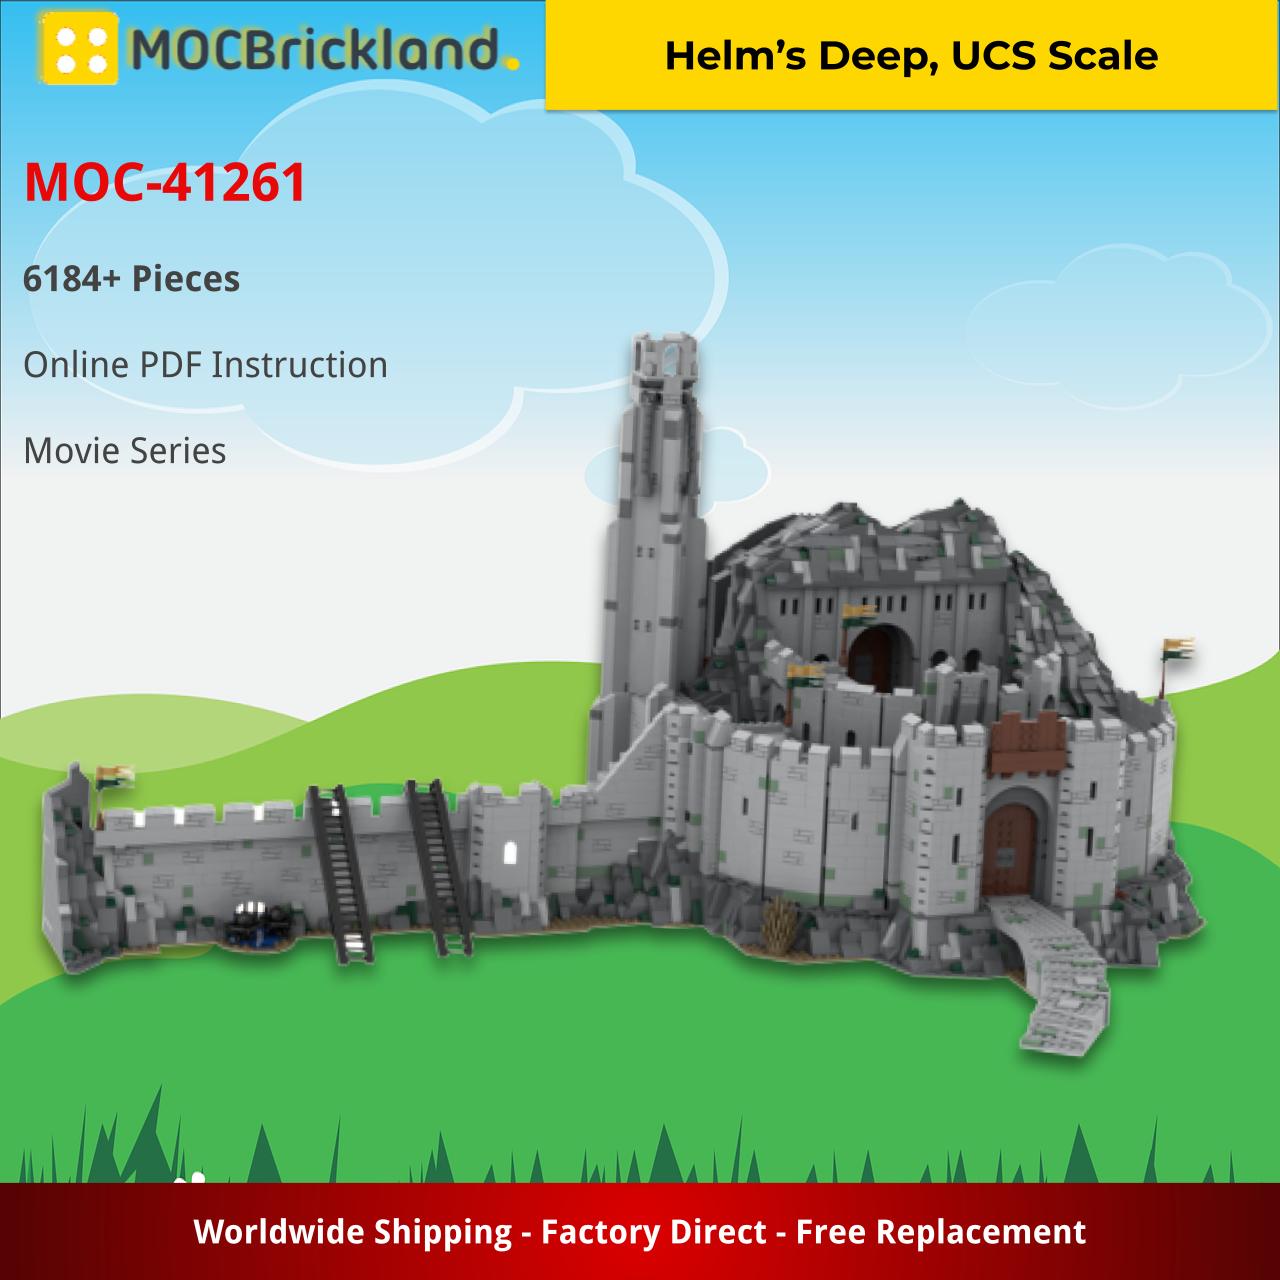 MOCBRICKLAND MOC-41261 Helm's Deep UCS Scale